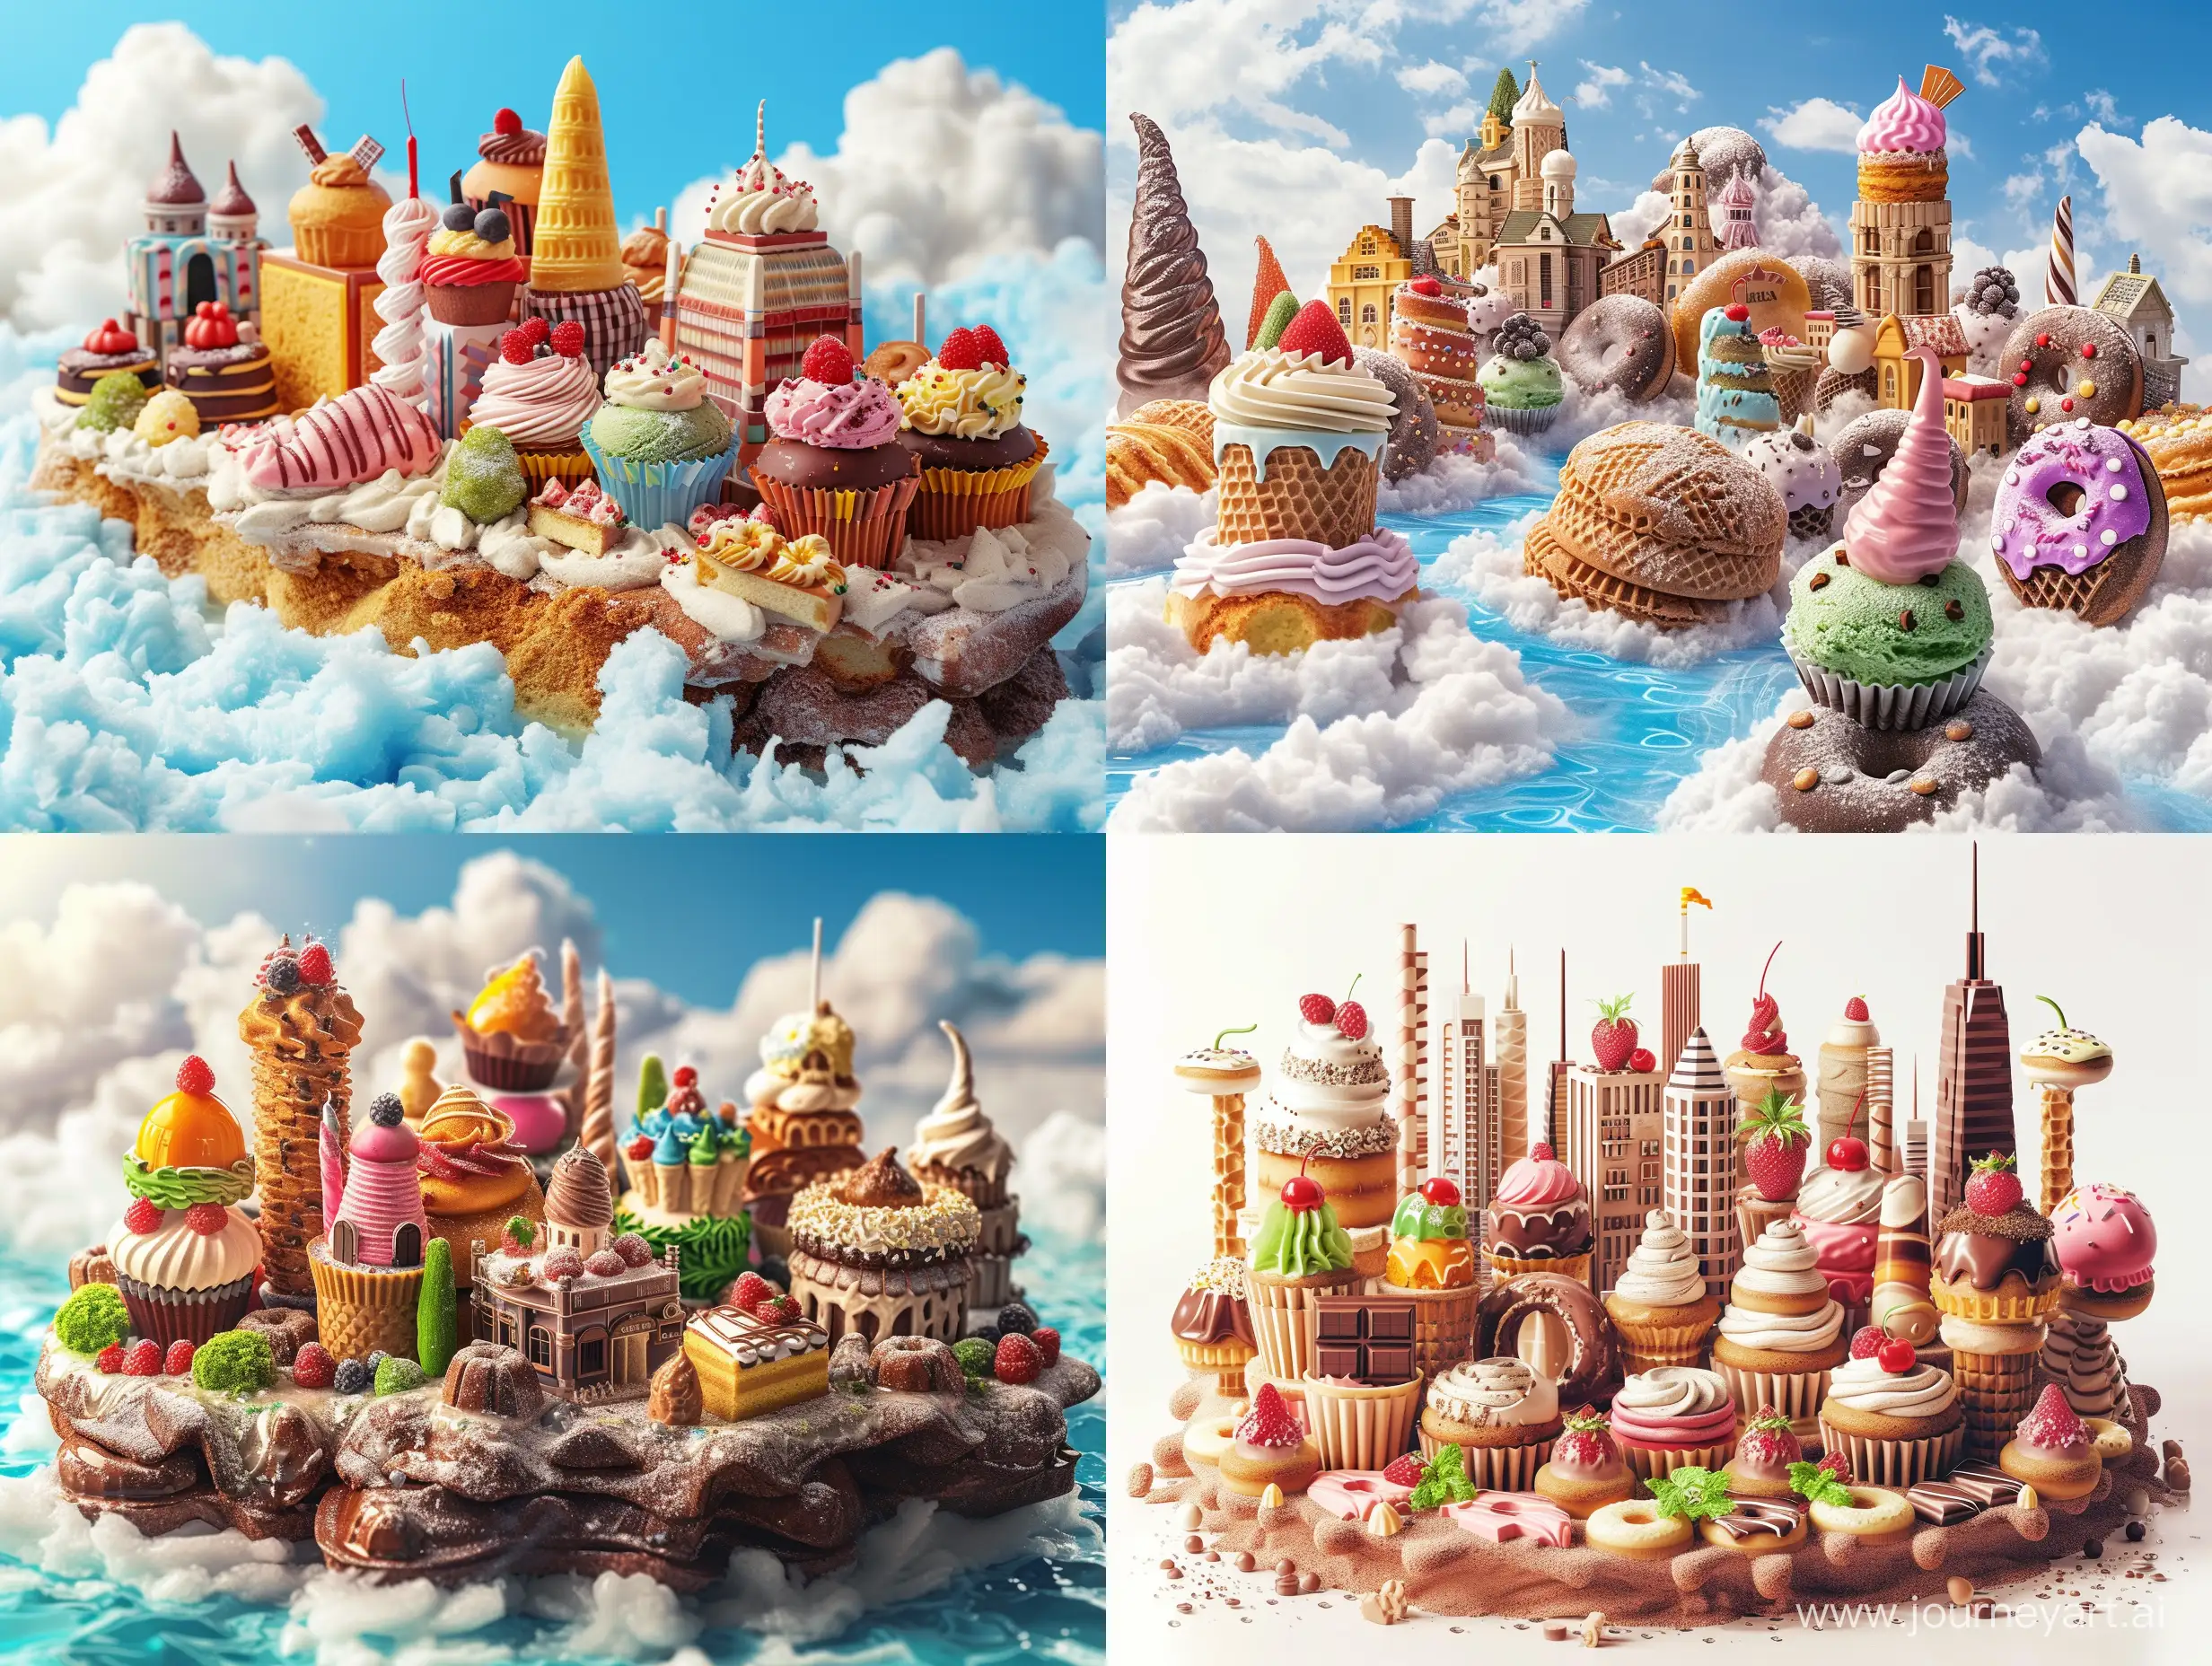 gelato city made of desserts, cakes, chocolates, fantasy, high quality, baking goods, cupcakes, donuts, ice-cream